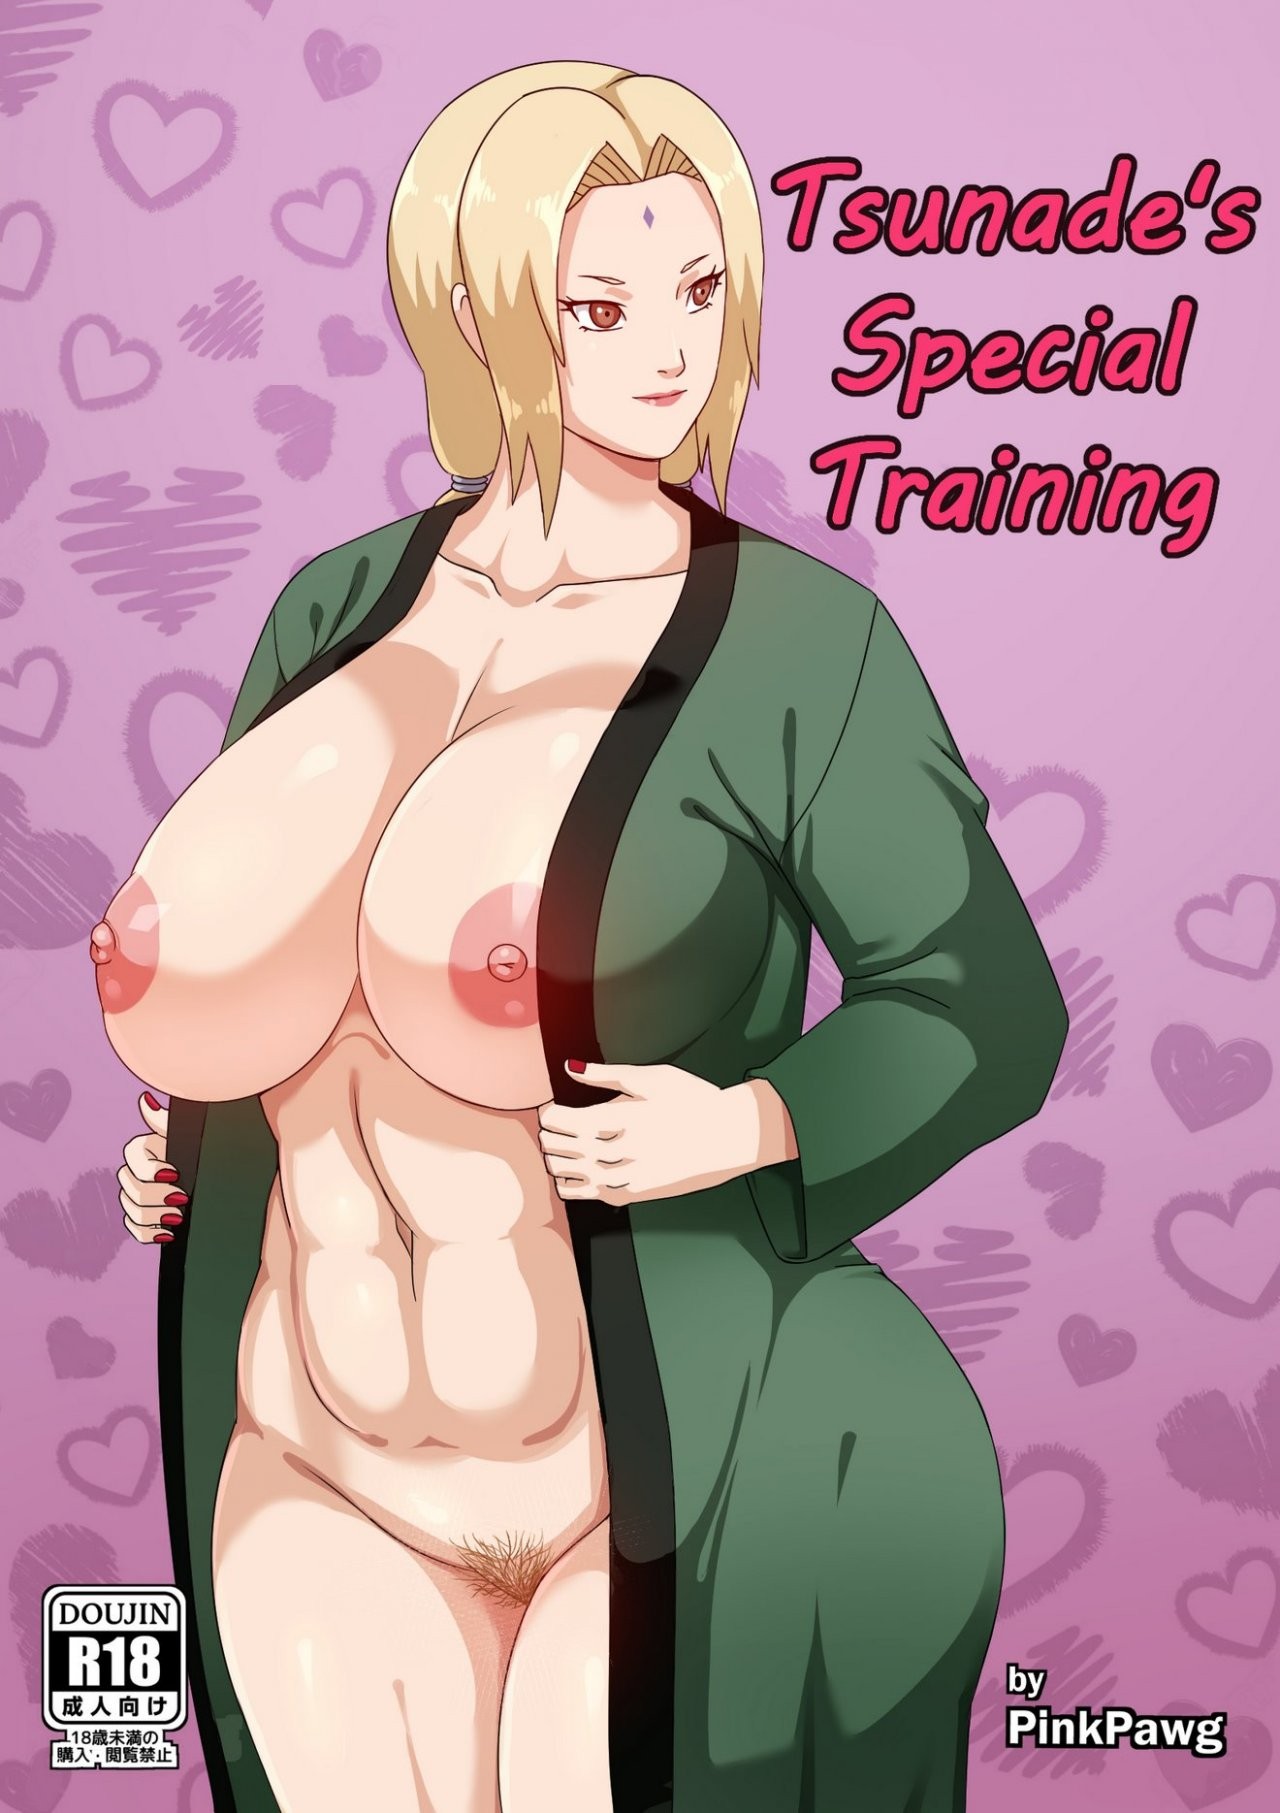 Tsunade's Special Training porn comic picture 1